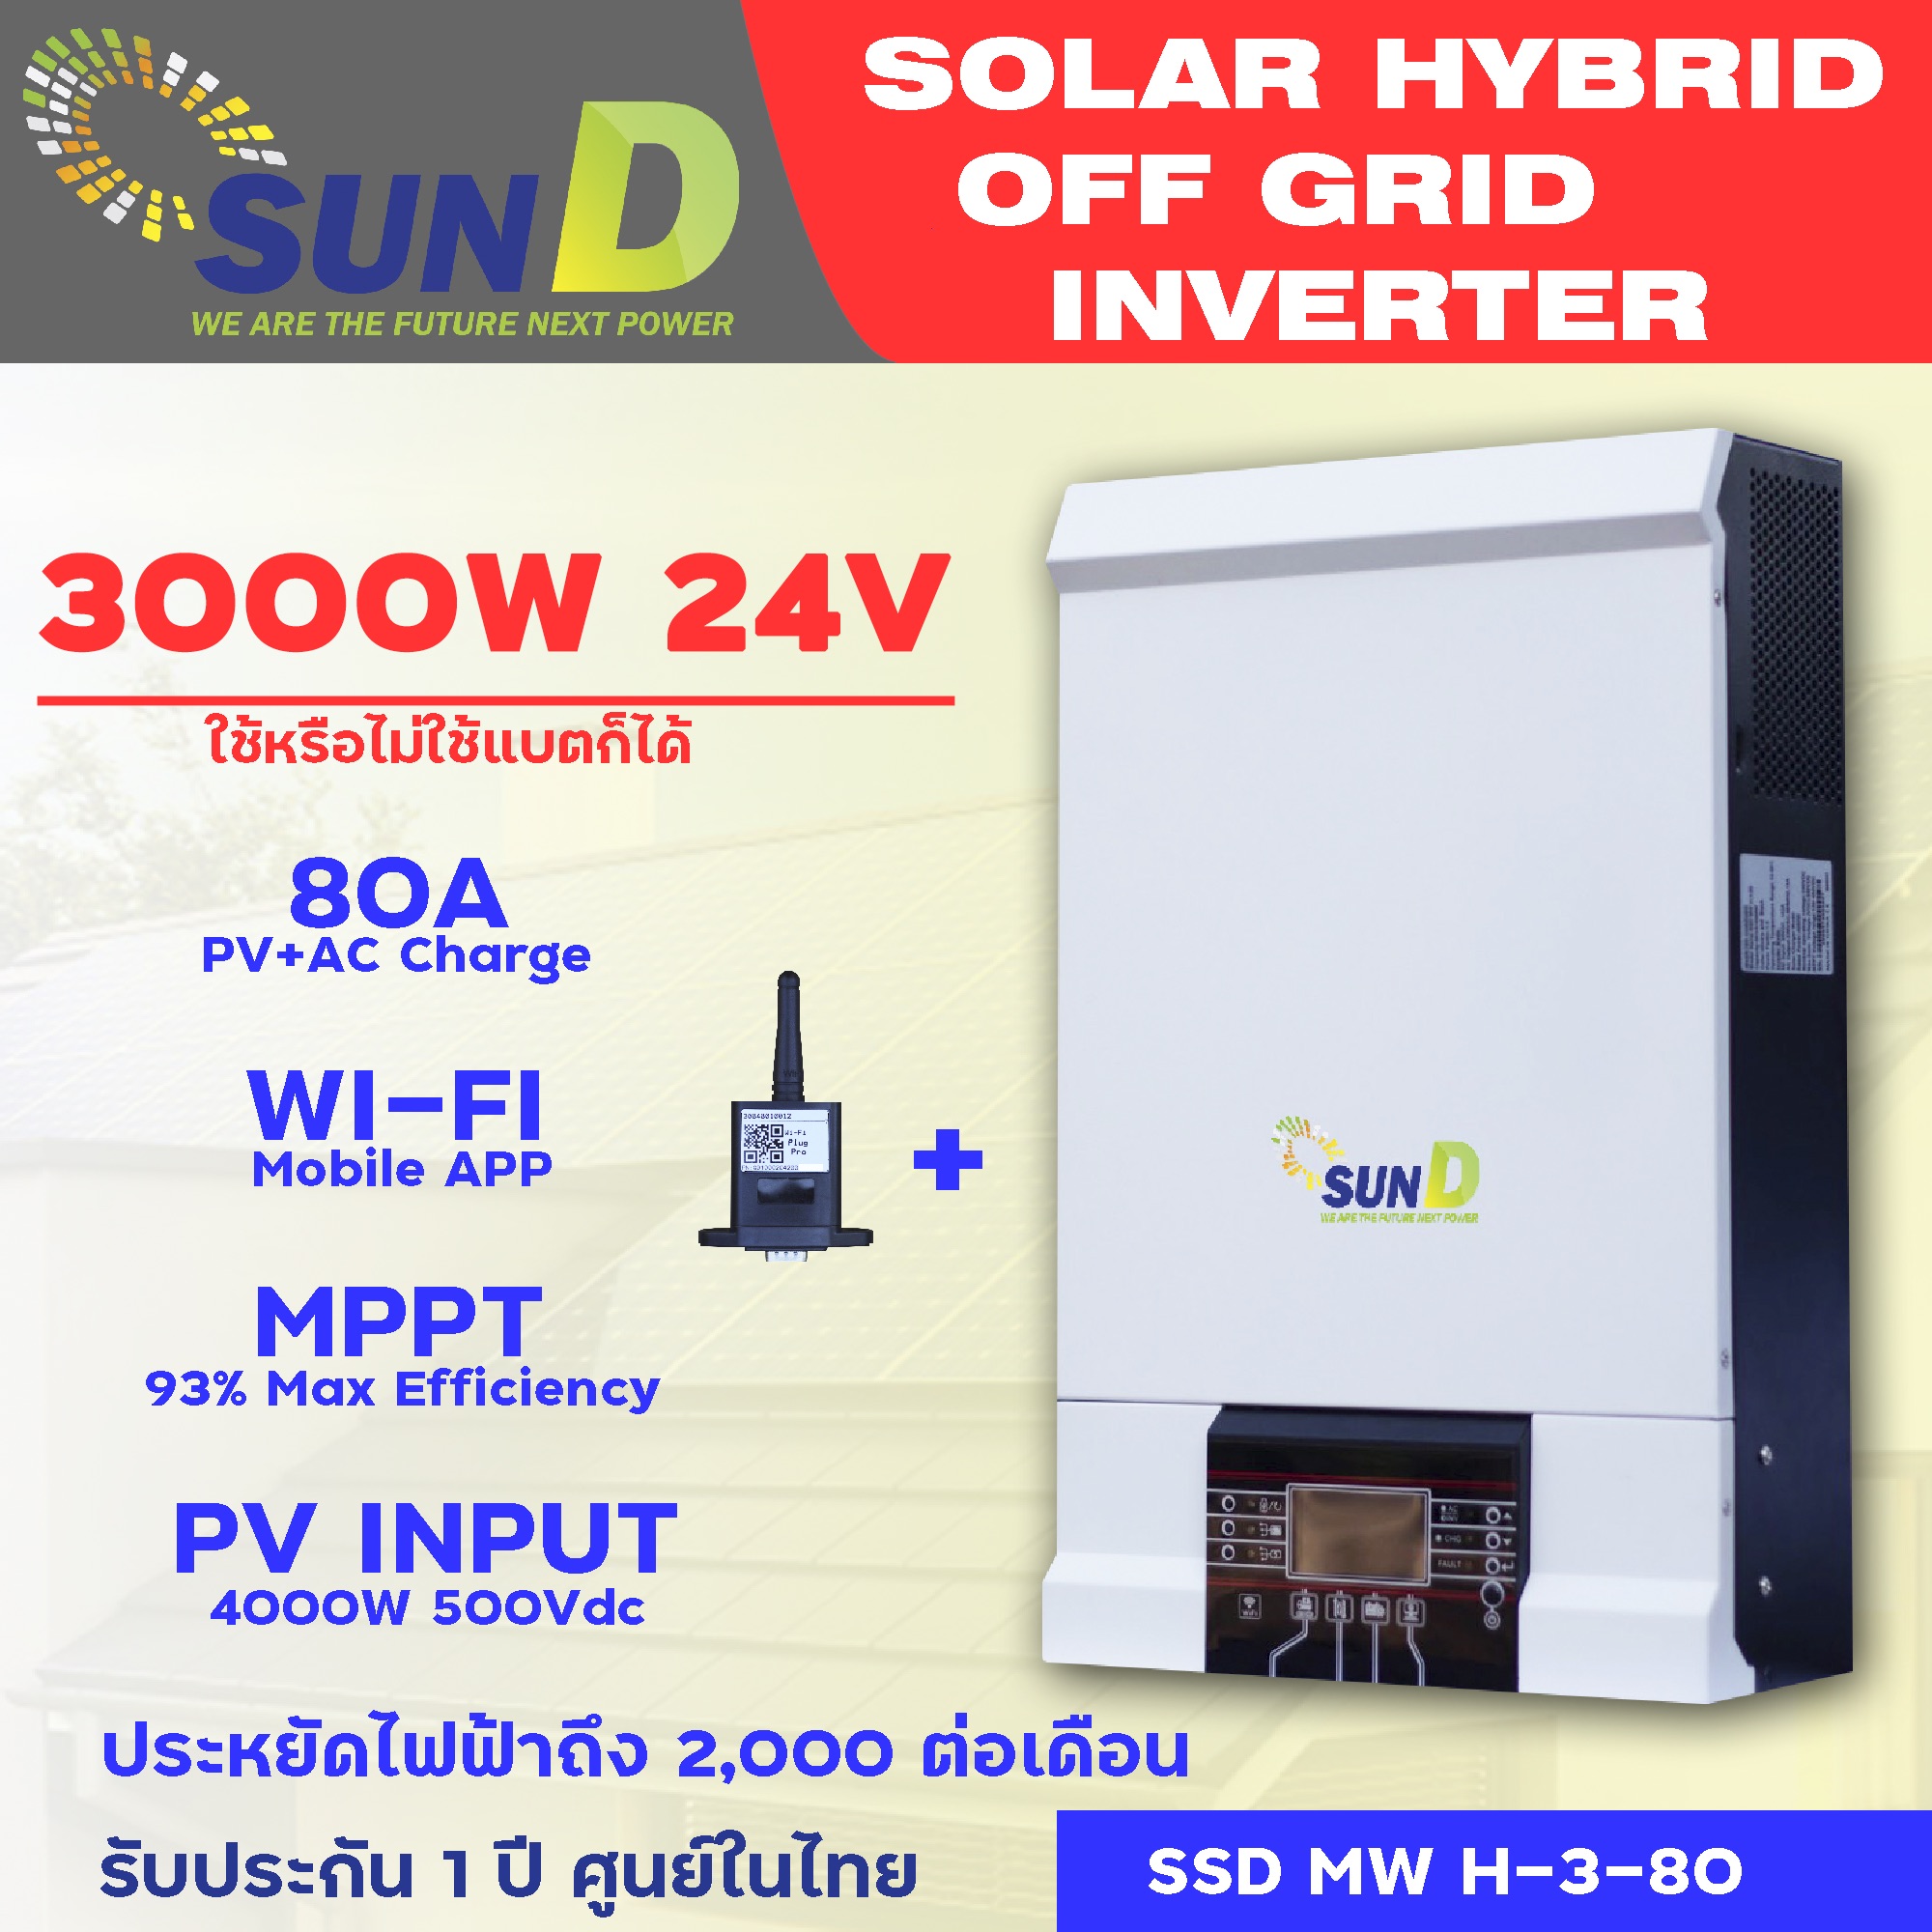 Hybrid off grid solar Inverter ไฮบริด ออฟกริด อินเวอร์เตอร์ 3000w + WIFI SUN D Inverter